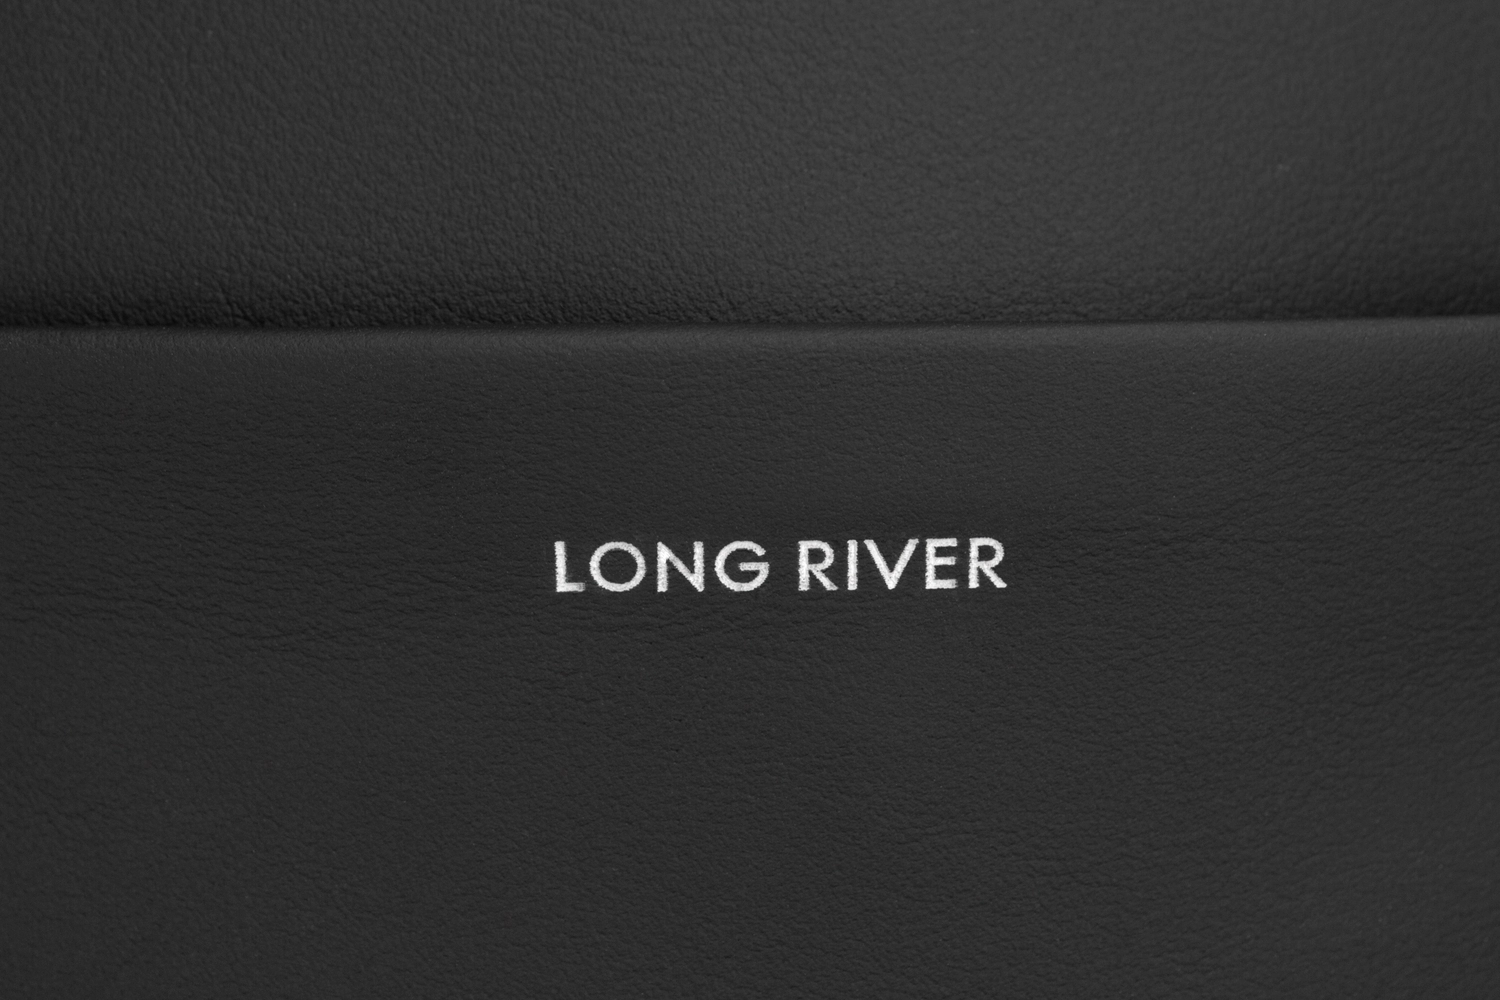 Long river